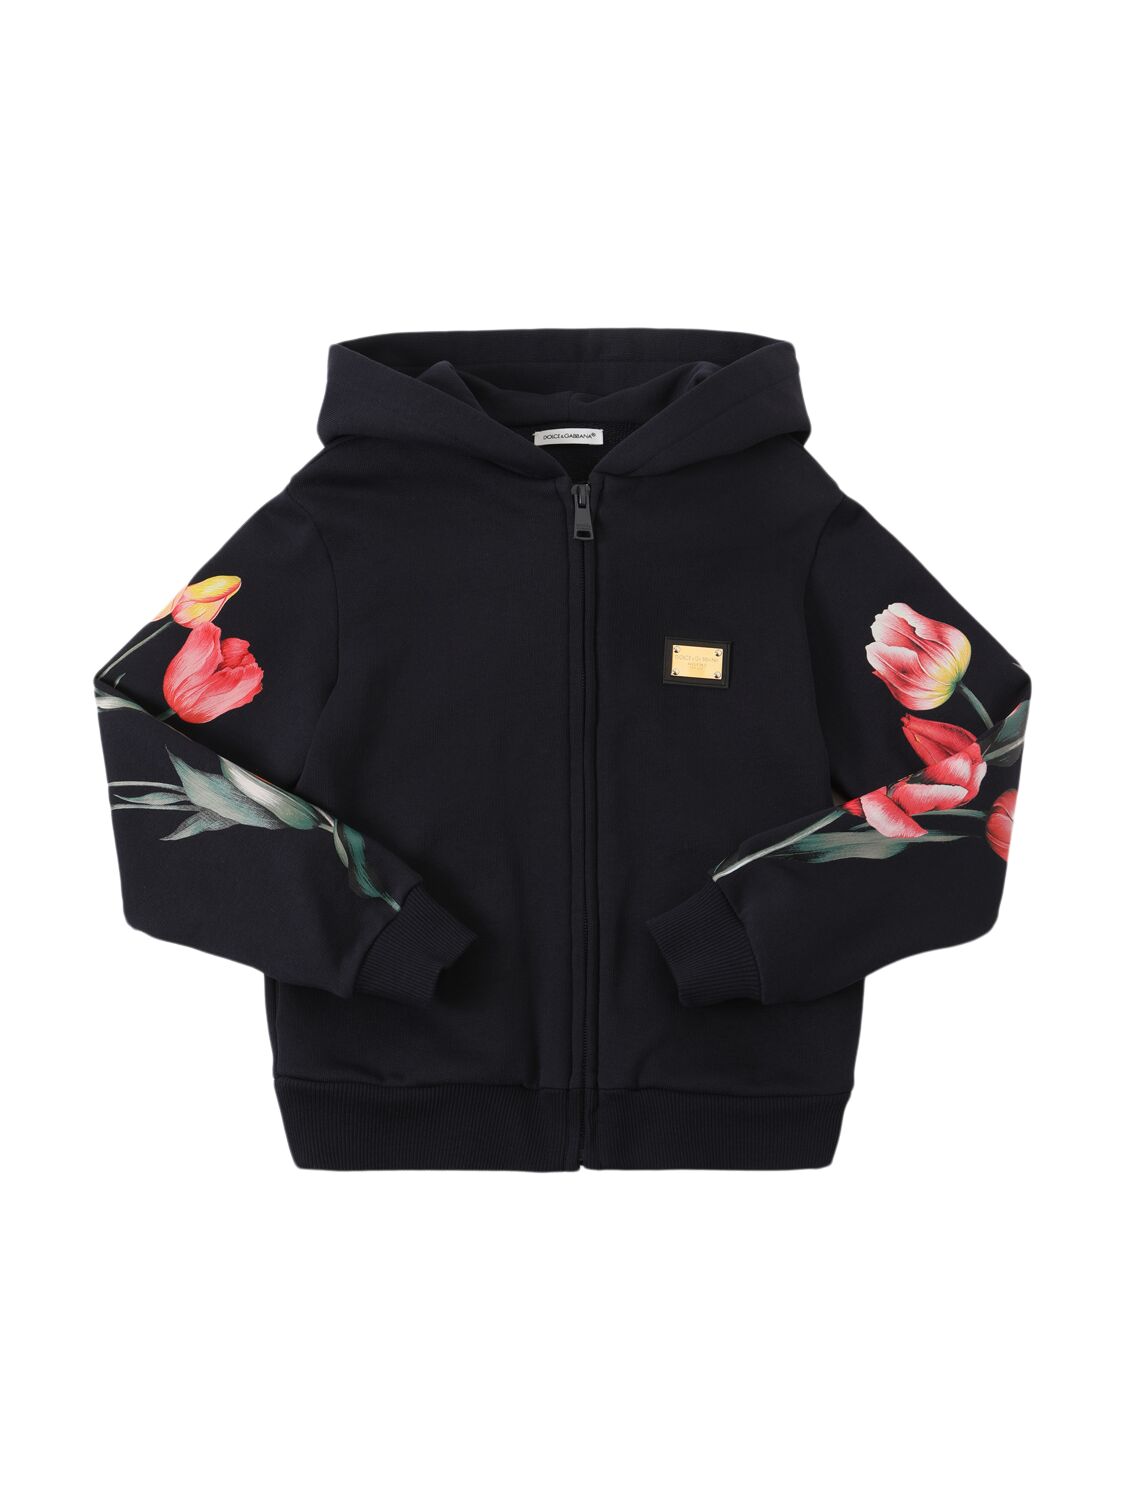 Dolce & Gabbana Printed Cotton Zip-up Sweatshirt W/ Hood In Black